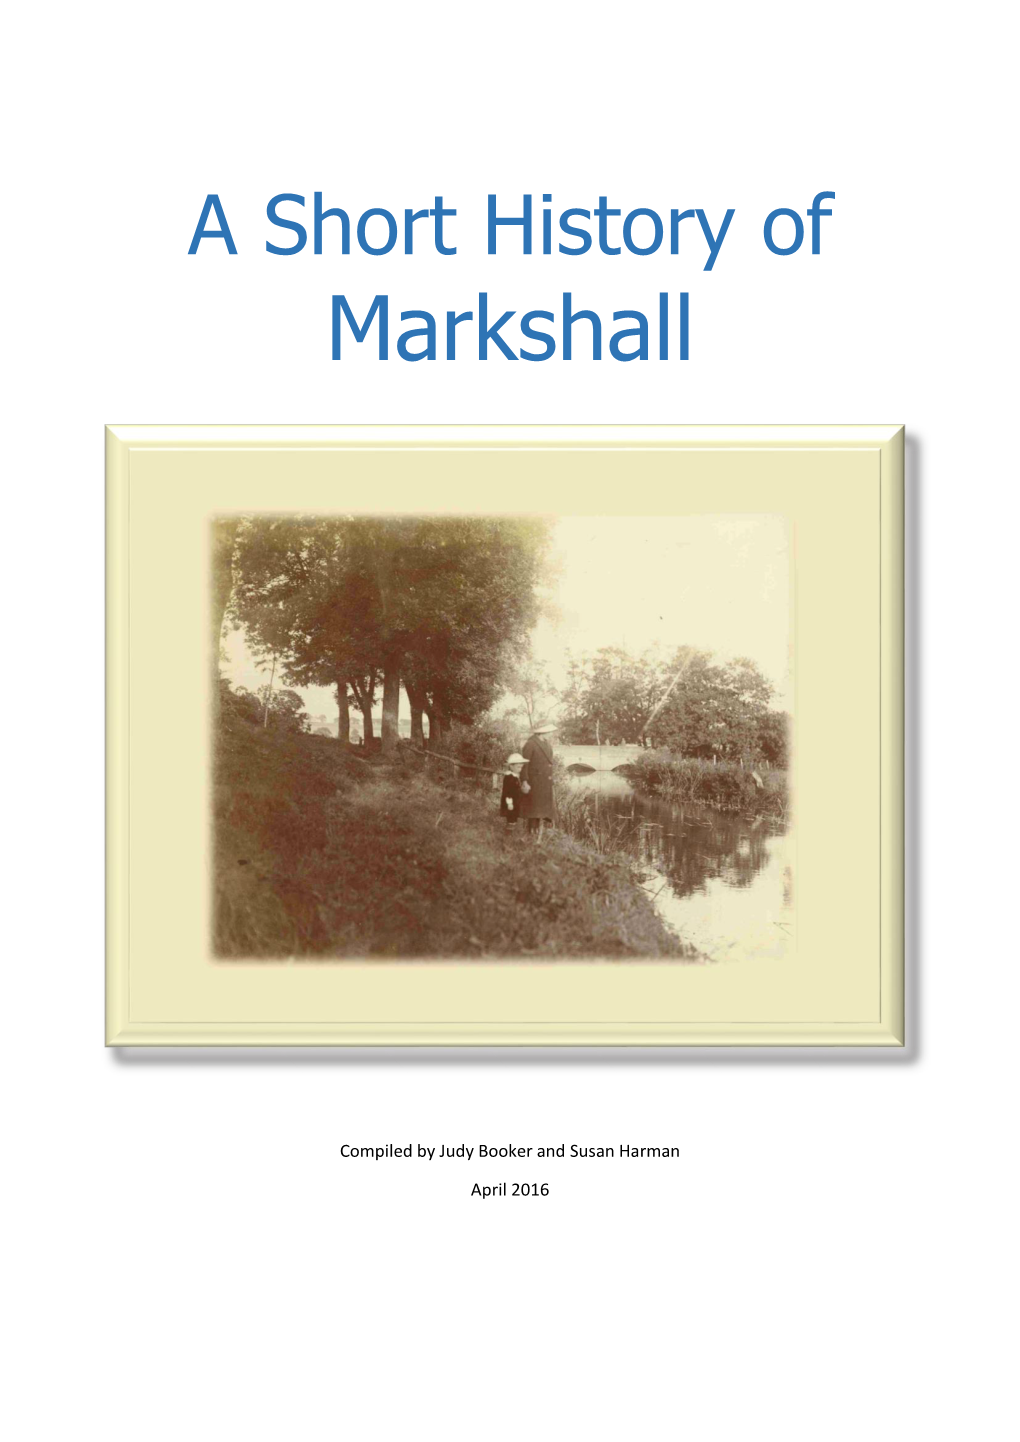 A Short History of Markshall